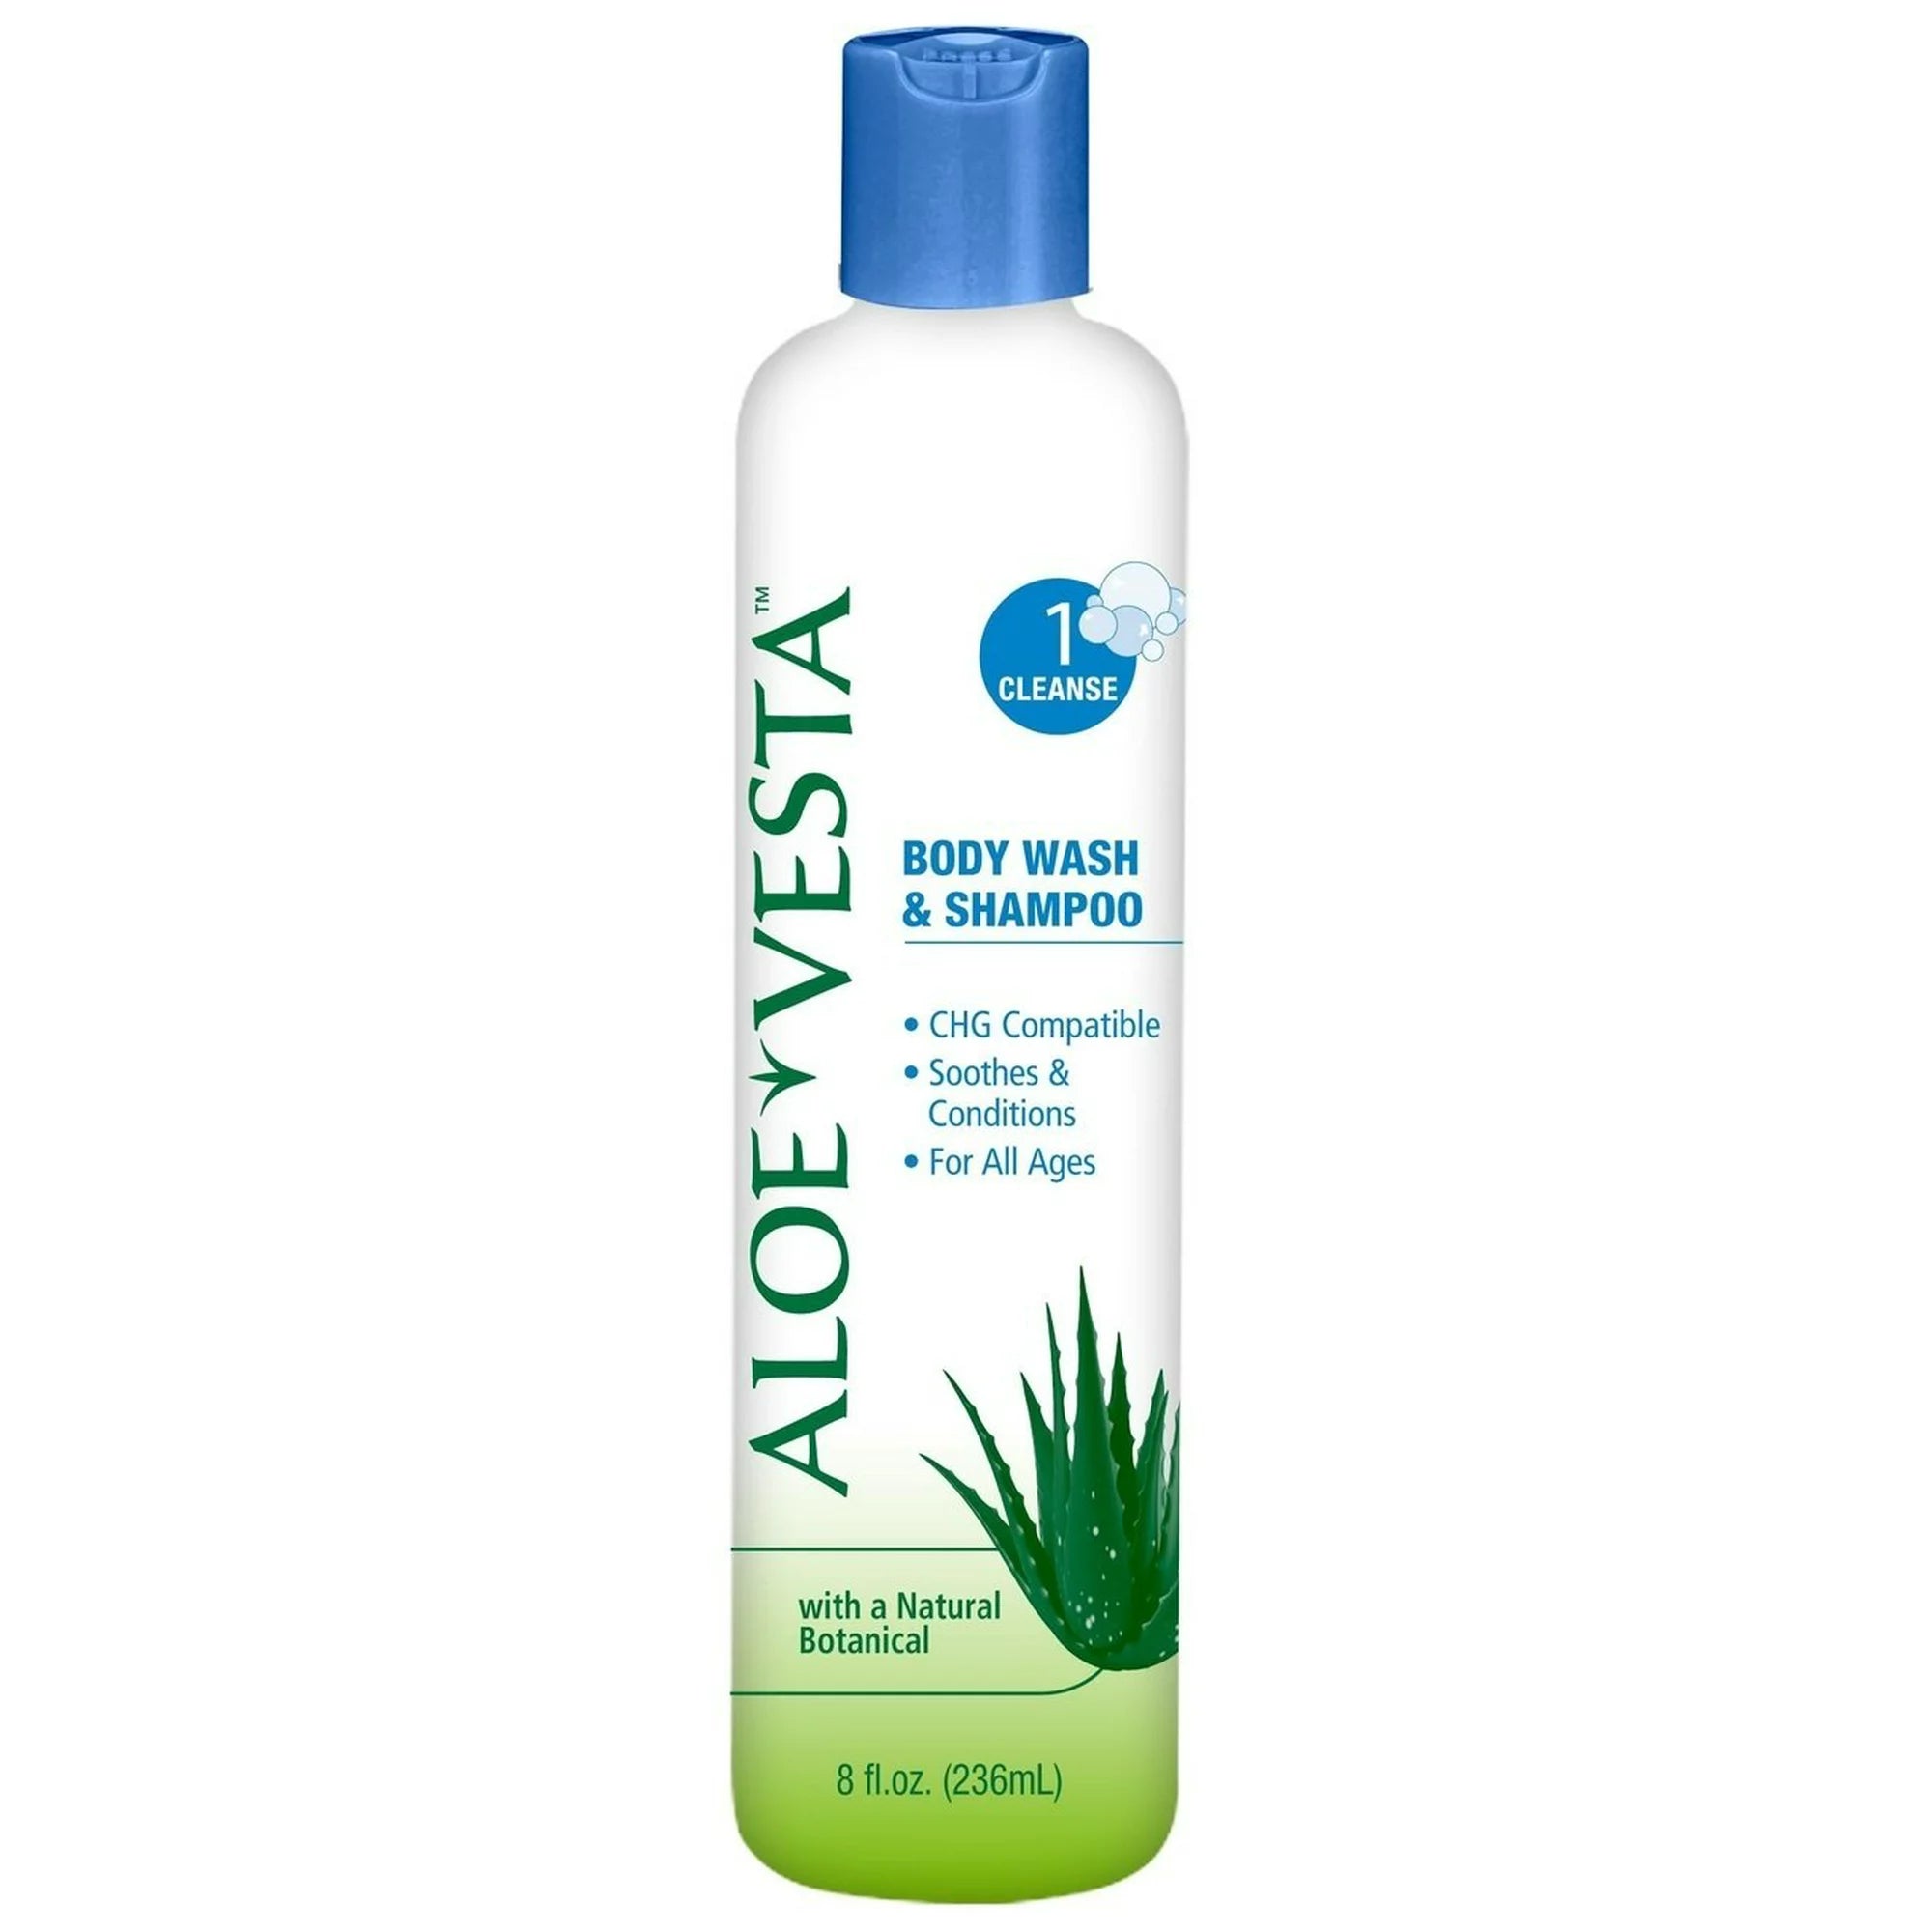 Aloe Vesta Body Wash & Shampoo white bottle with blue cap